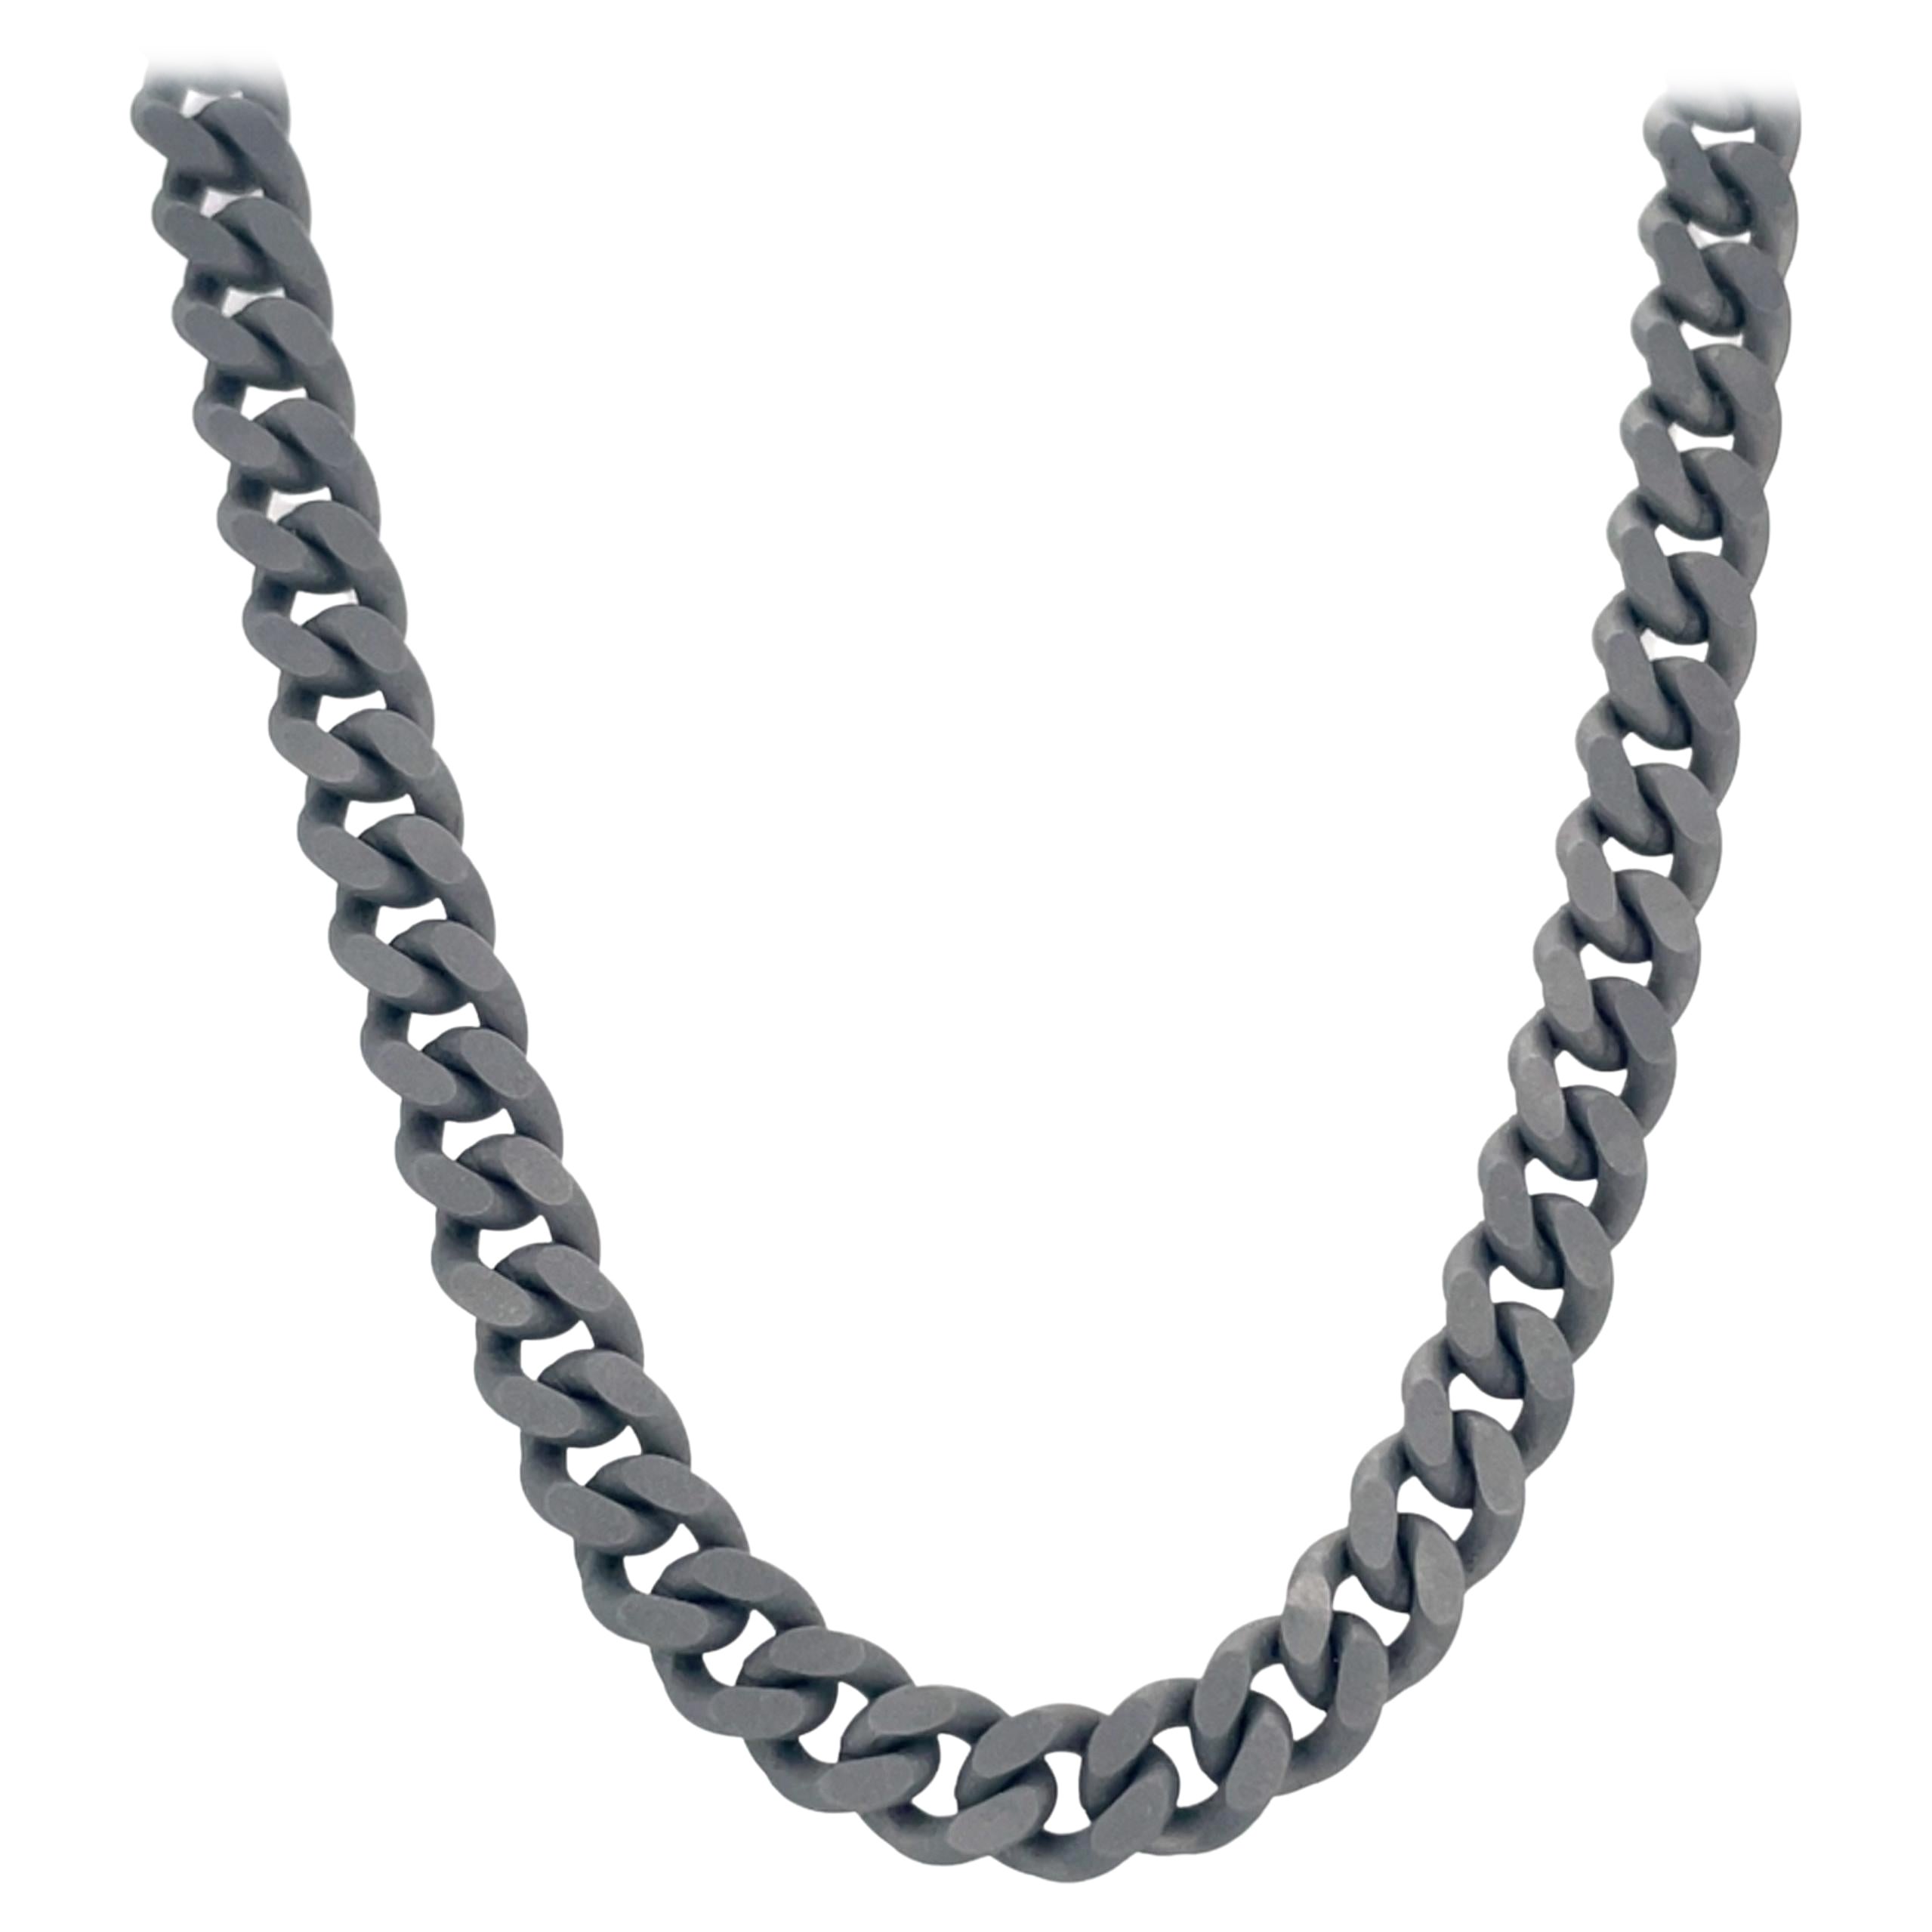 Men's Titanium Black Diamond Chain Necklace